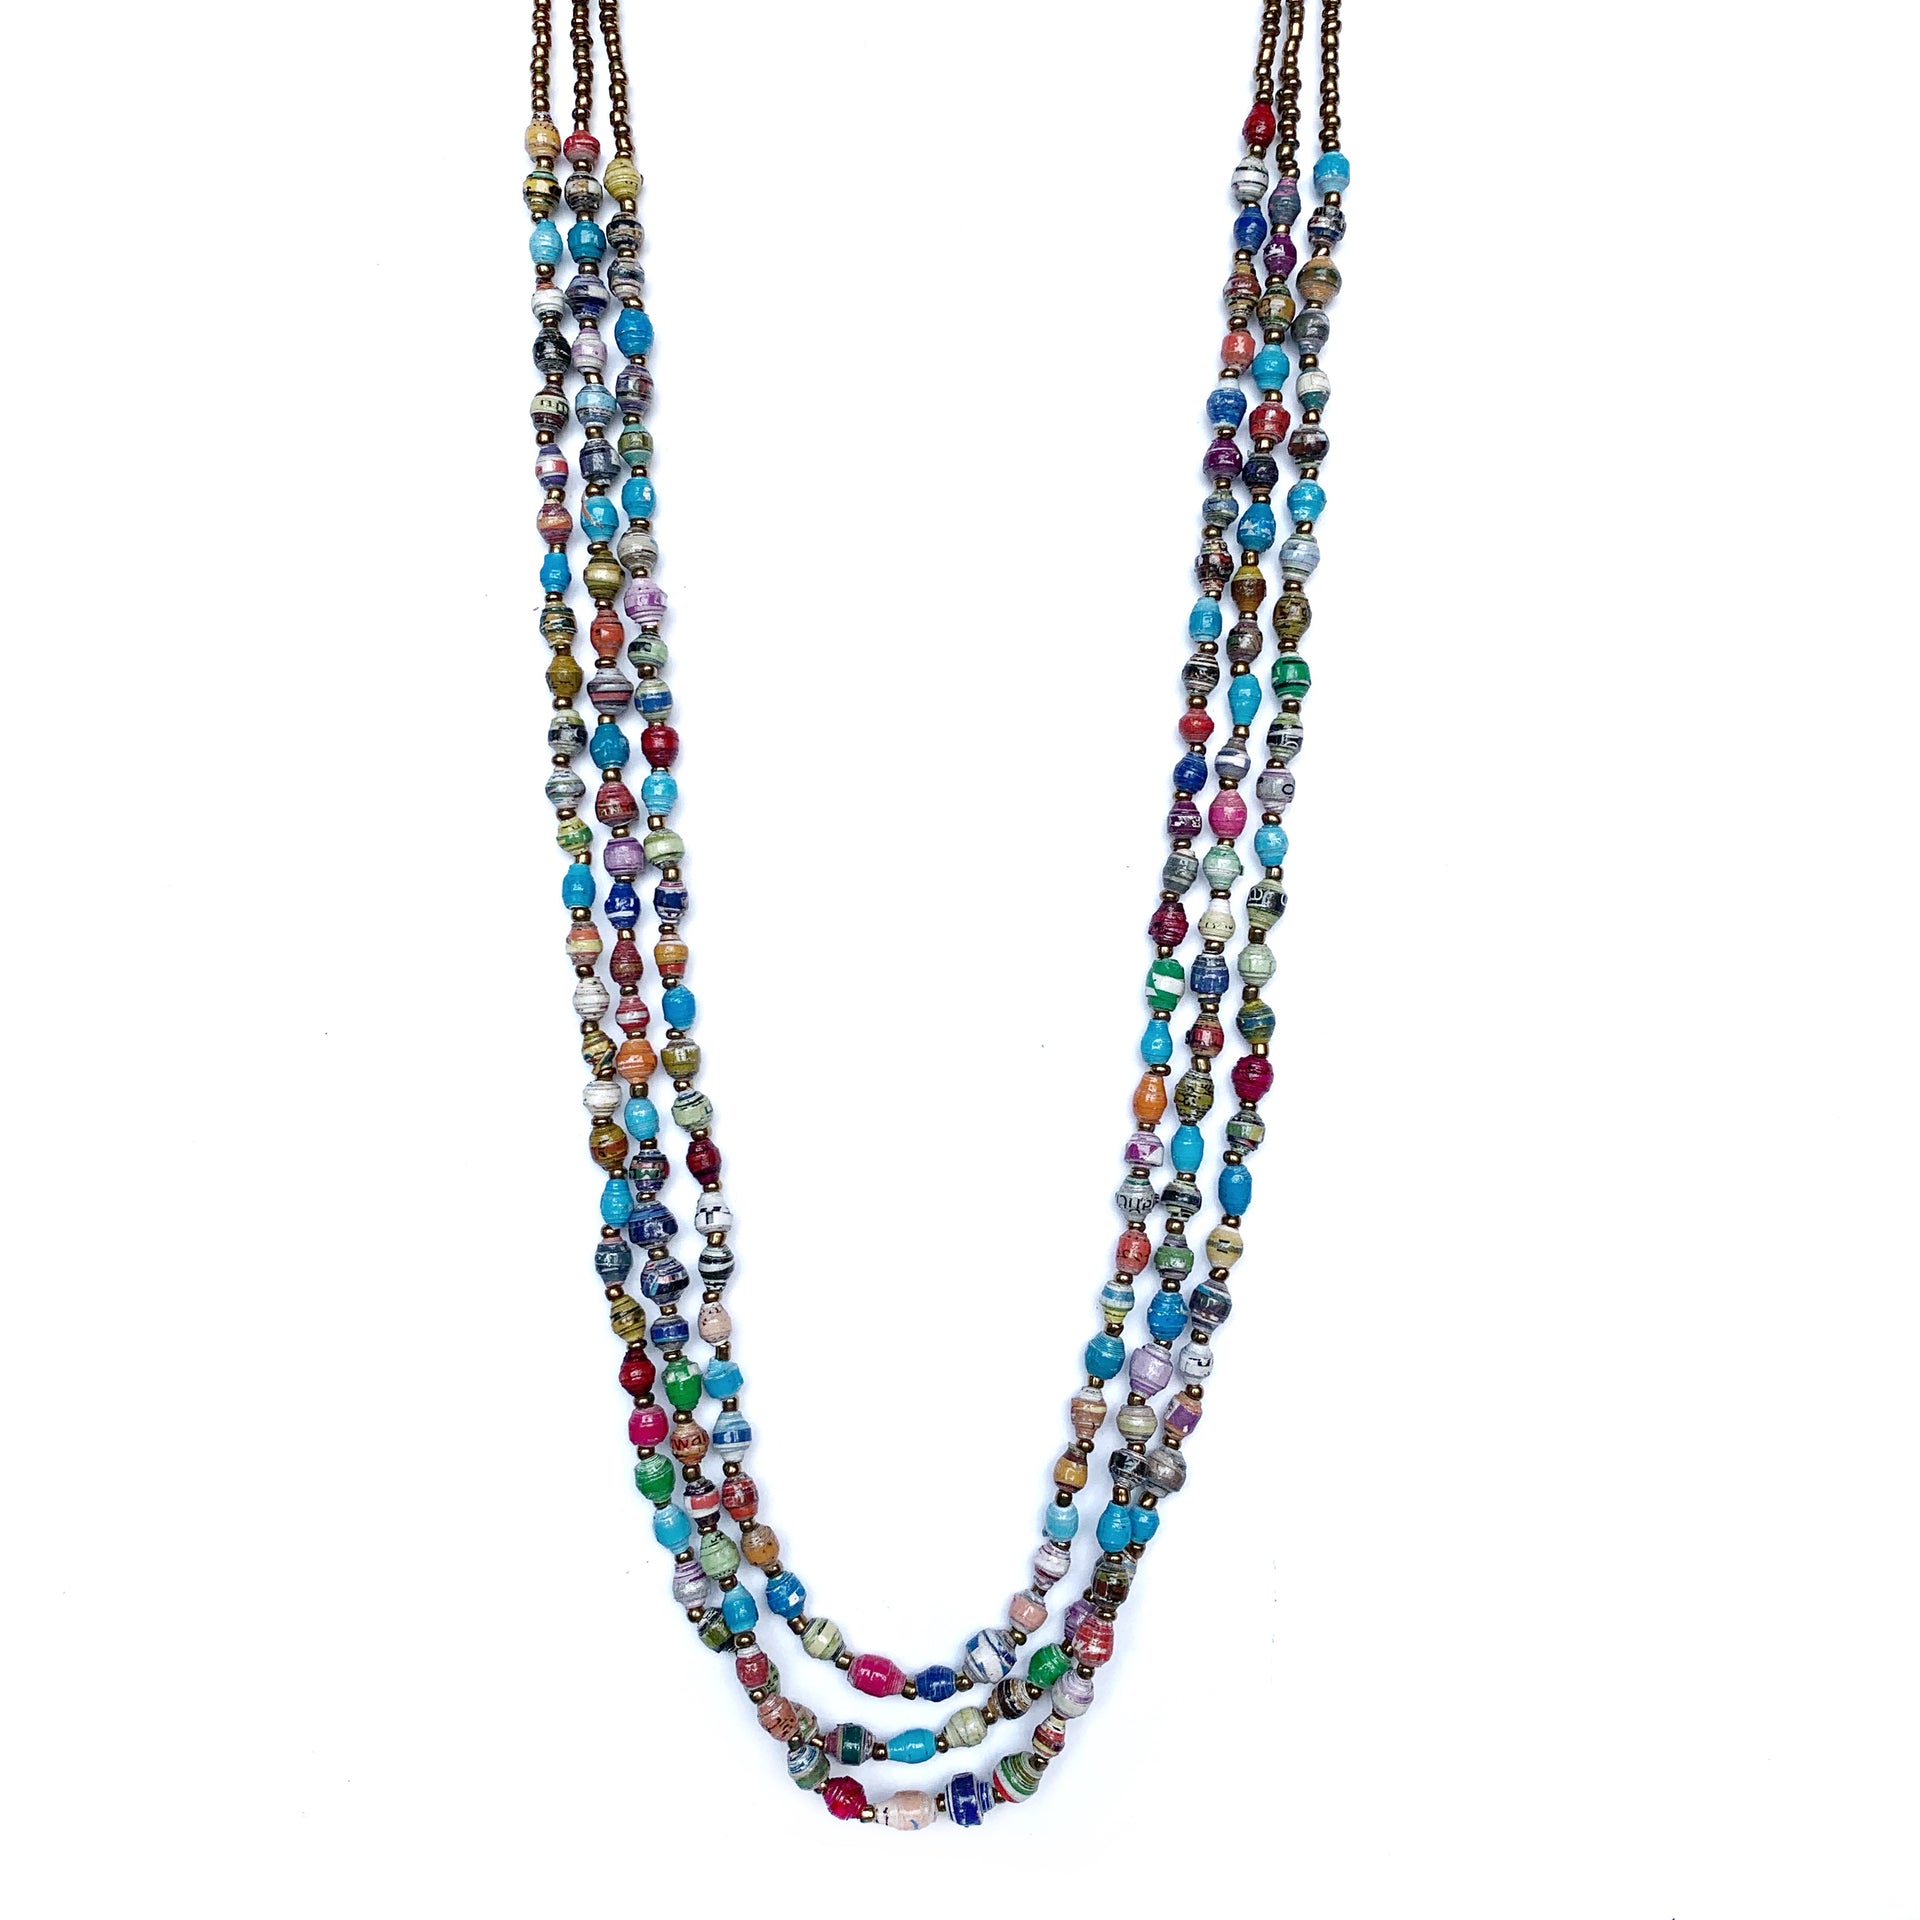 Maasai Paper Bead Necklace - 3 Strand